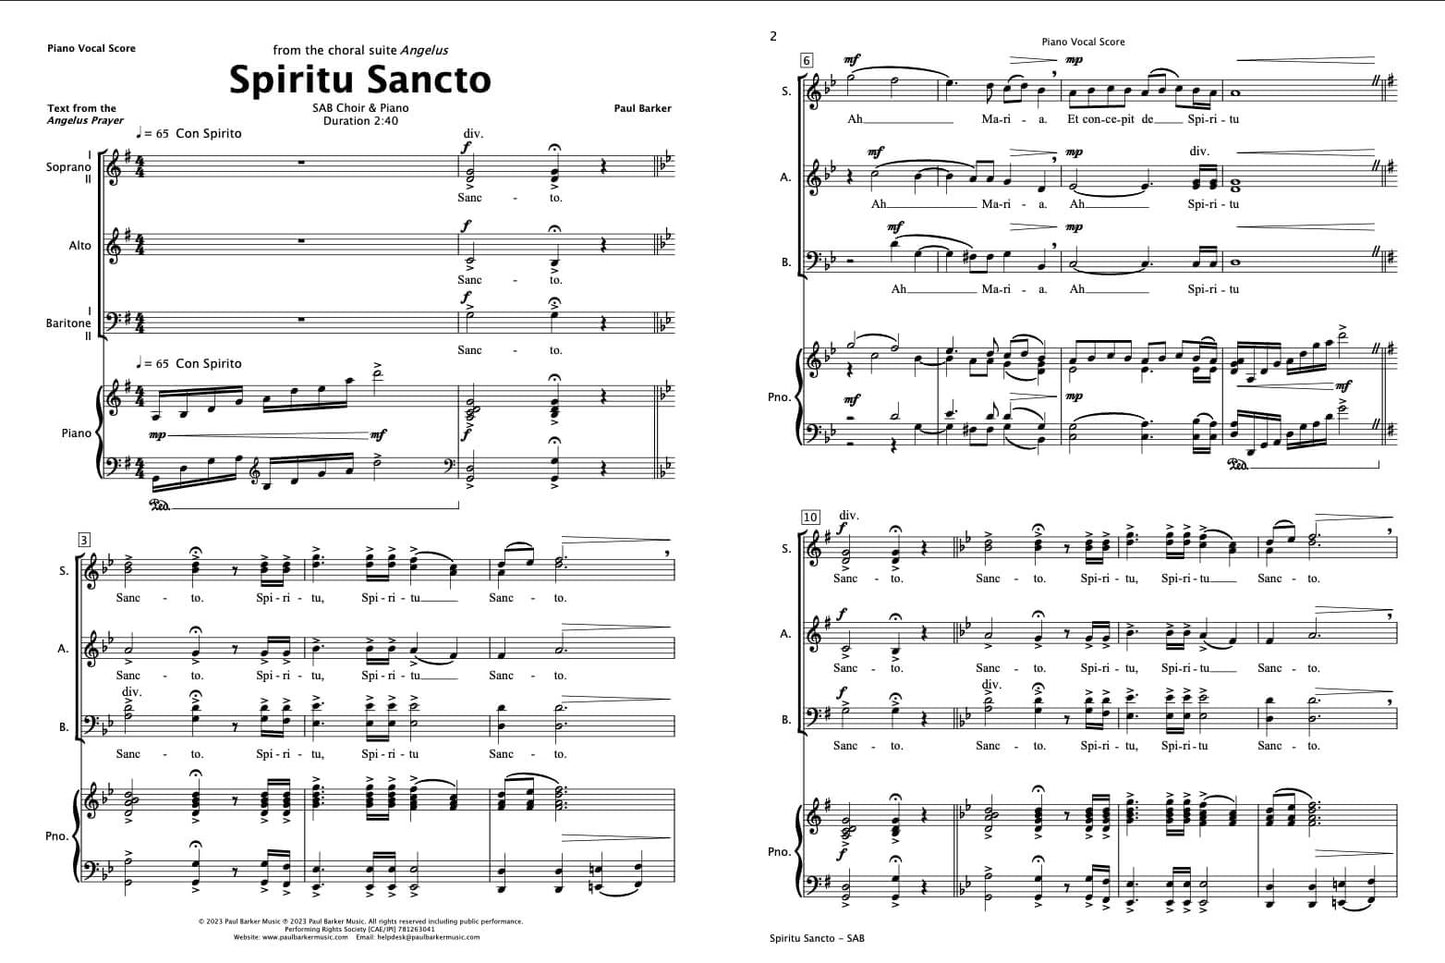 Spiritu Sancto (SAB Choir & Piano)